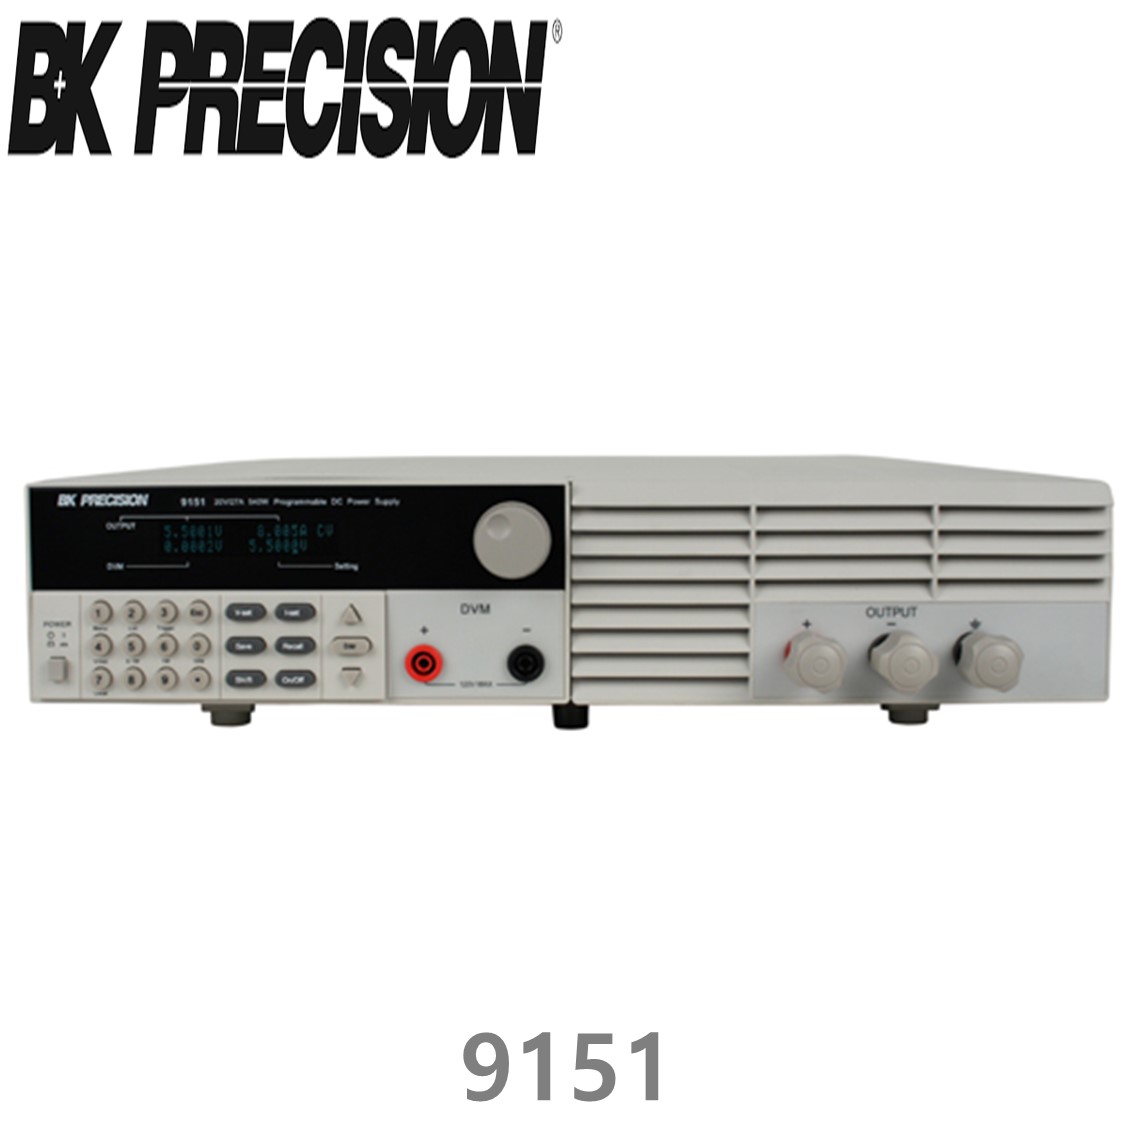 [ BK PRECISION ] BK 9151, 20V/27A, Programmable DC Power Supply, 프로그래머블 DC 전원공급기(540W), B&K 9151